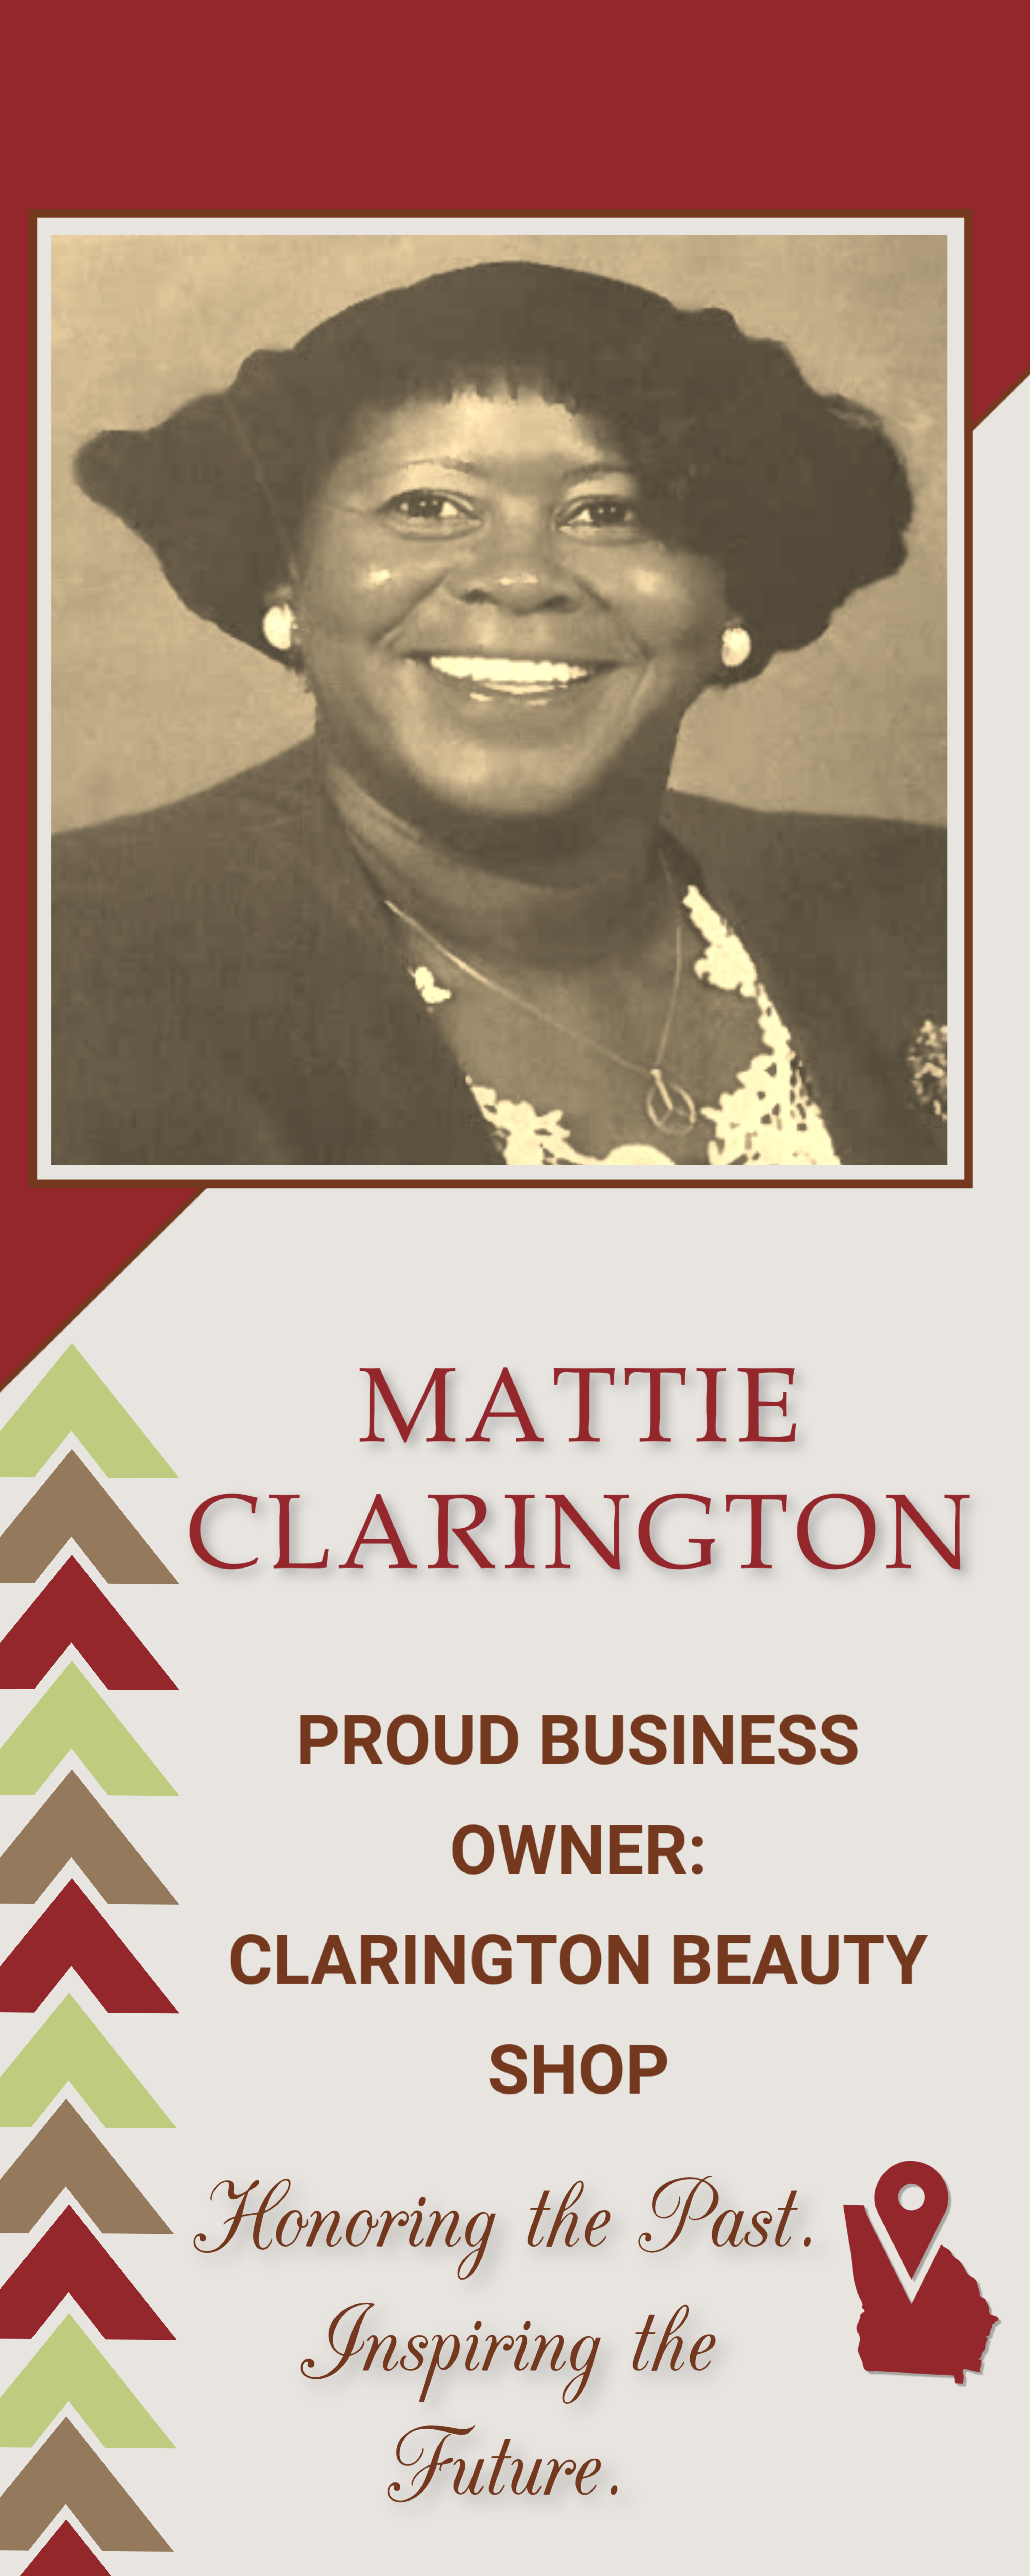 Mattie Clarington